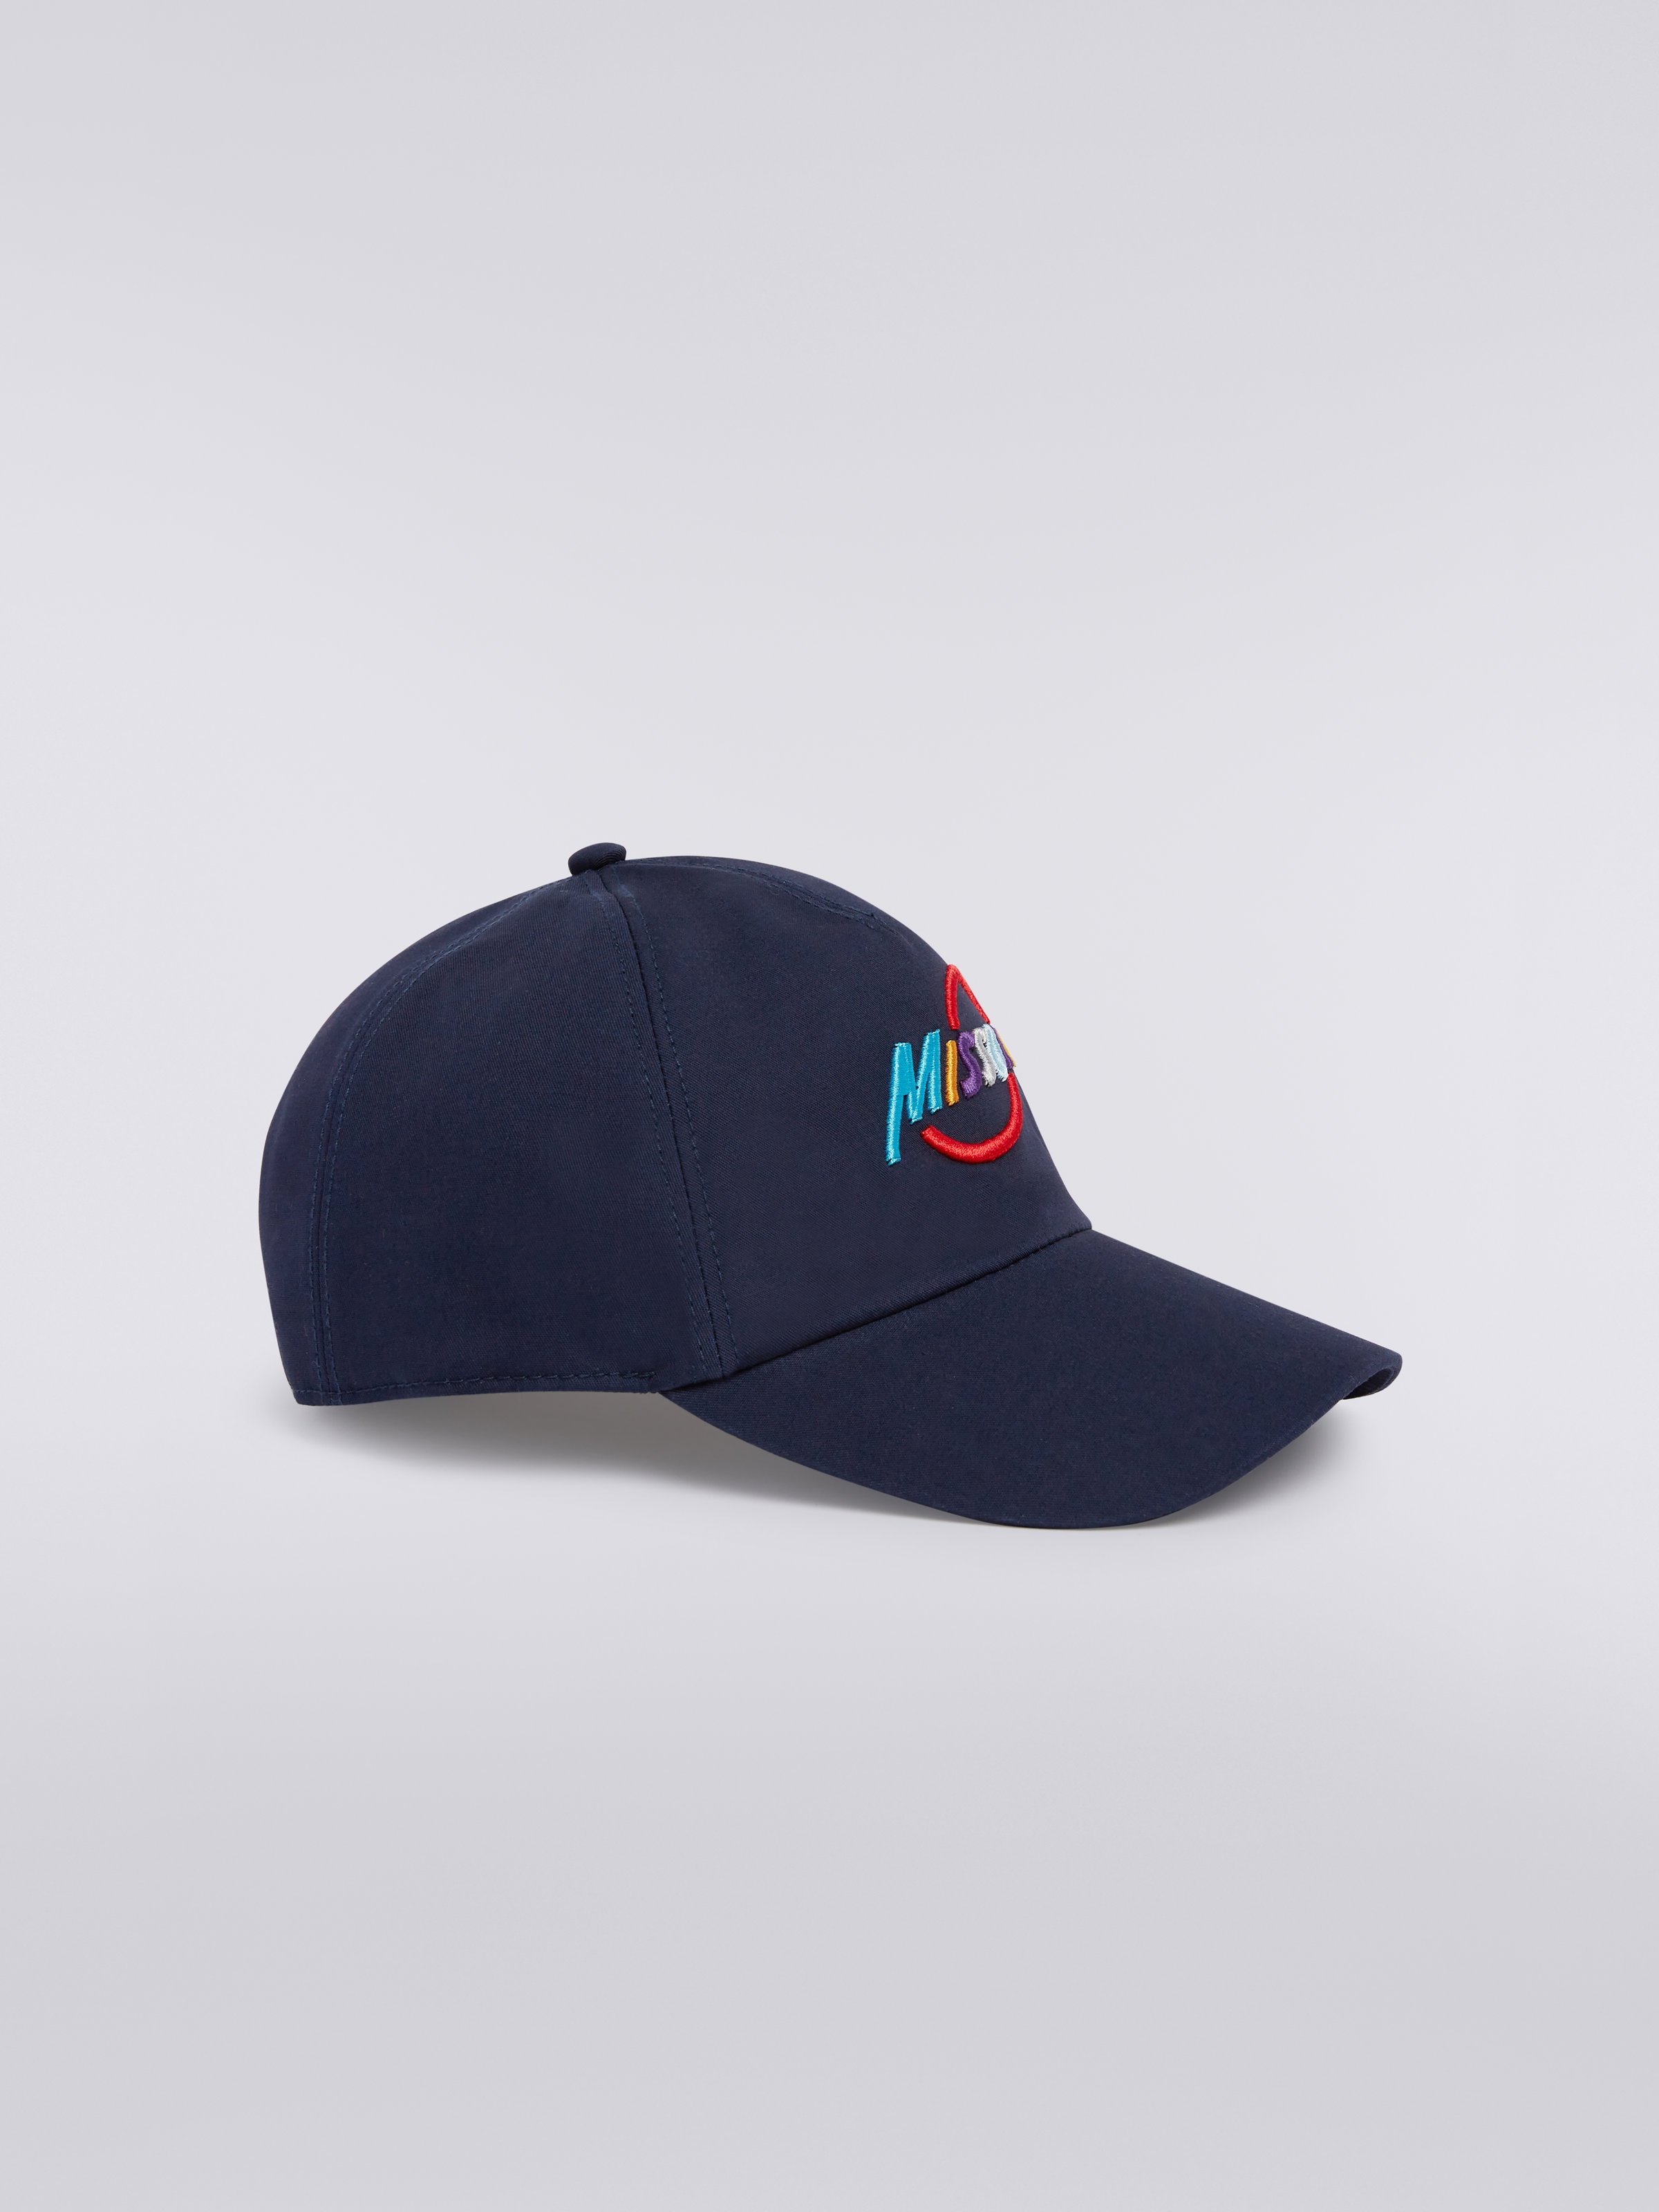 Cotton visor hat with multicoloured logo lettering, Blue - 1